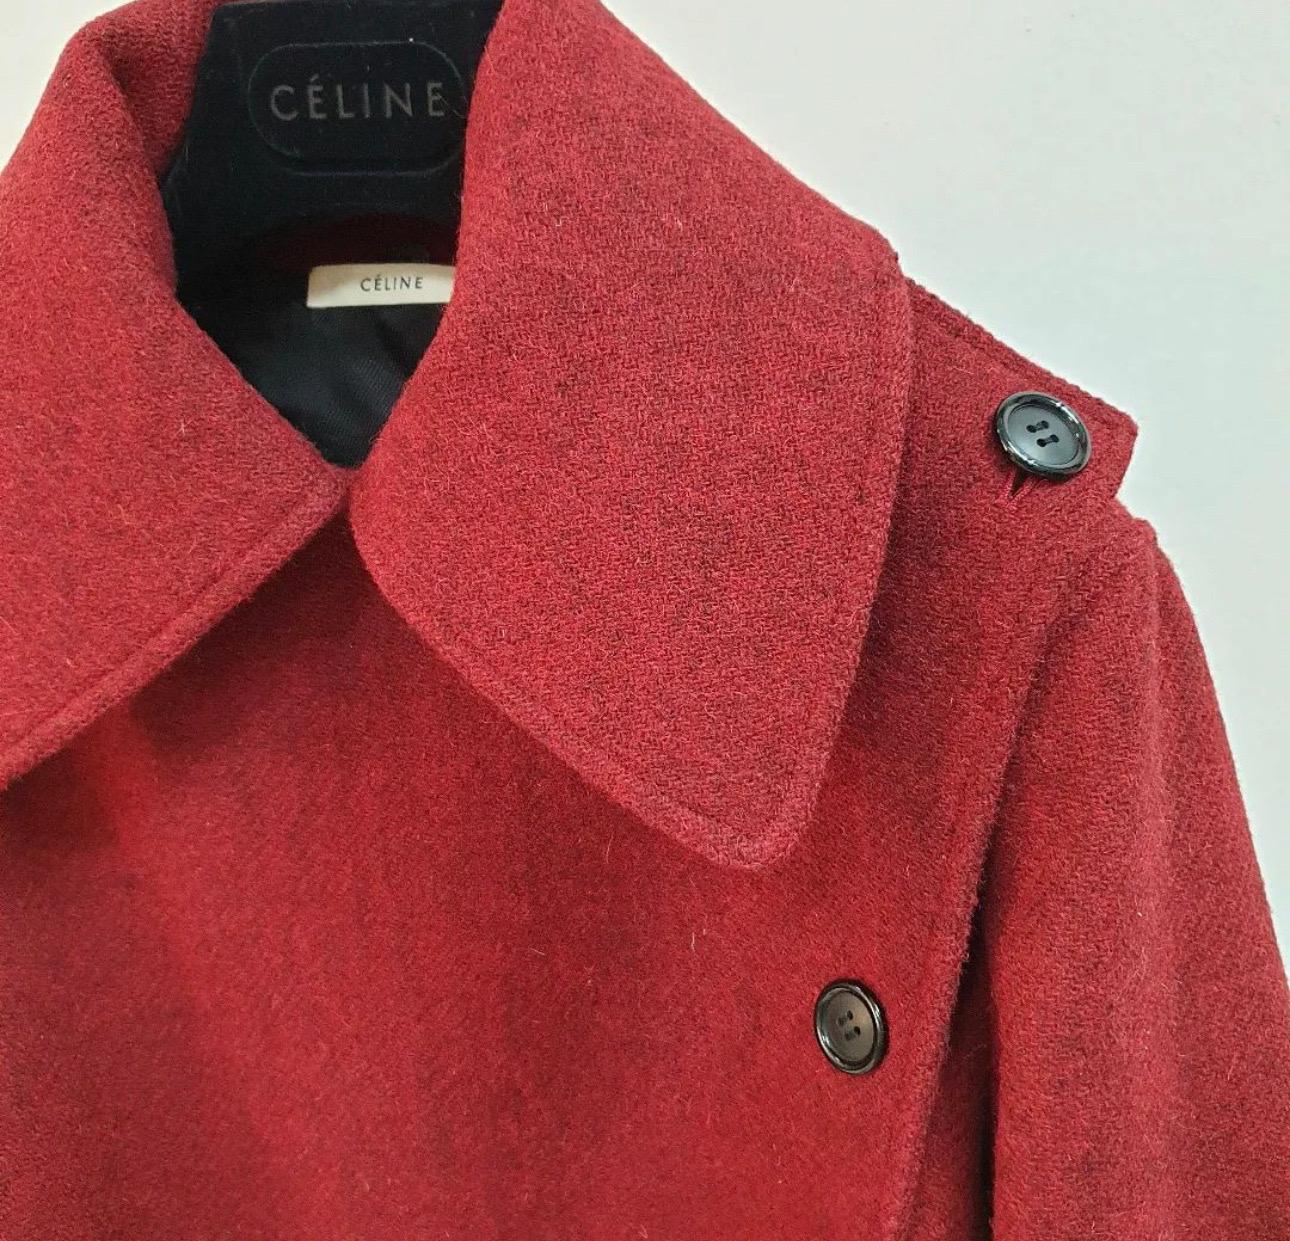     Est. retail price $3500
Celine Wool Fur Coat
    Red
    Colorblock Pattern
    Fur Trim & Stand Collar
    Long
    Flap Pockets & Button Closure
Sz.36
Very good condition